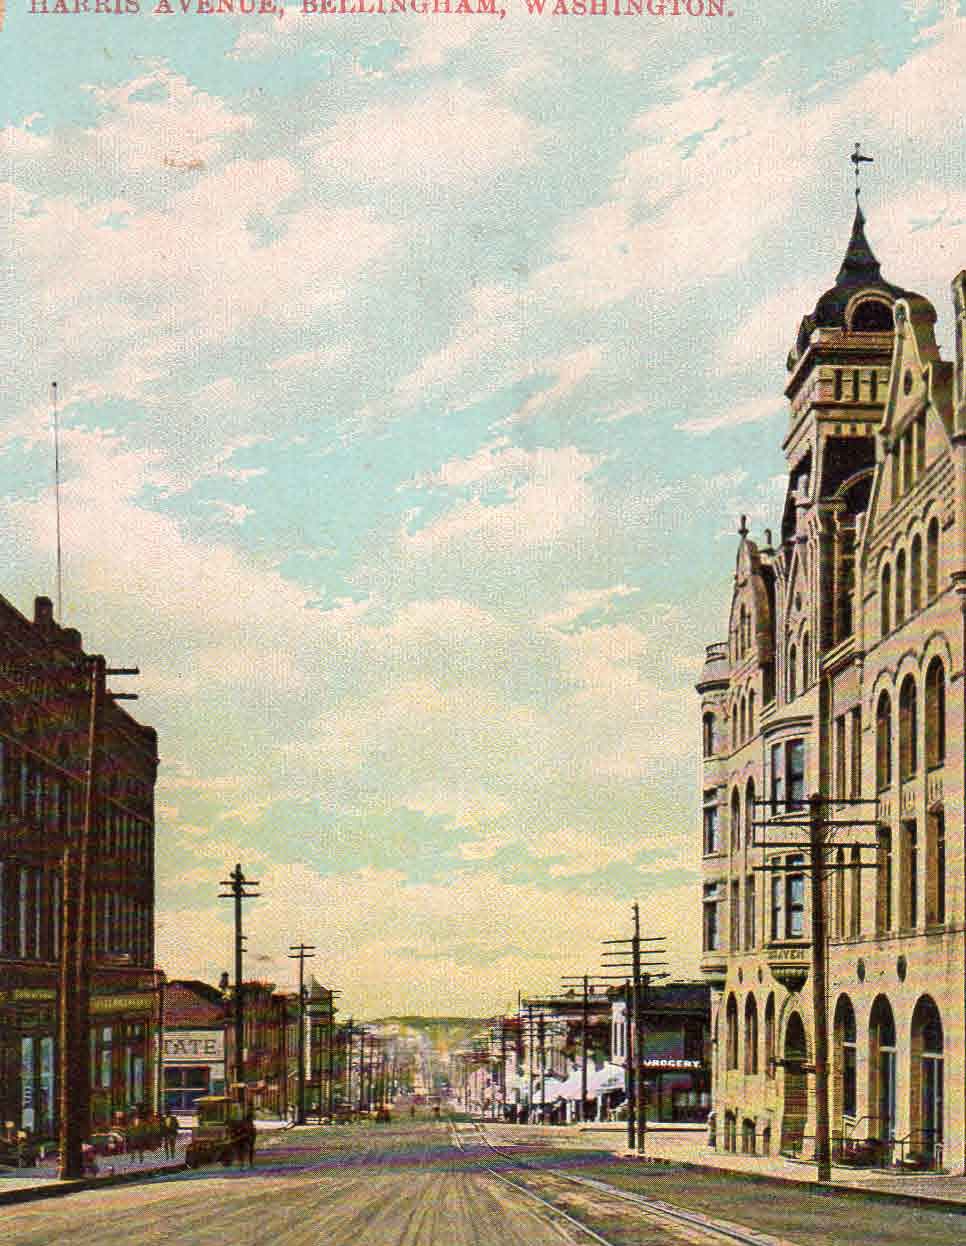 Harris Ave, Bellingham, Wa  1915